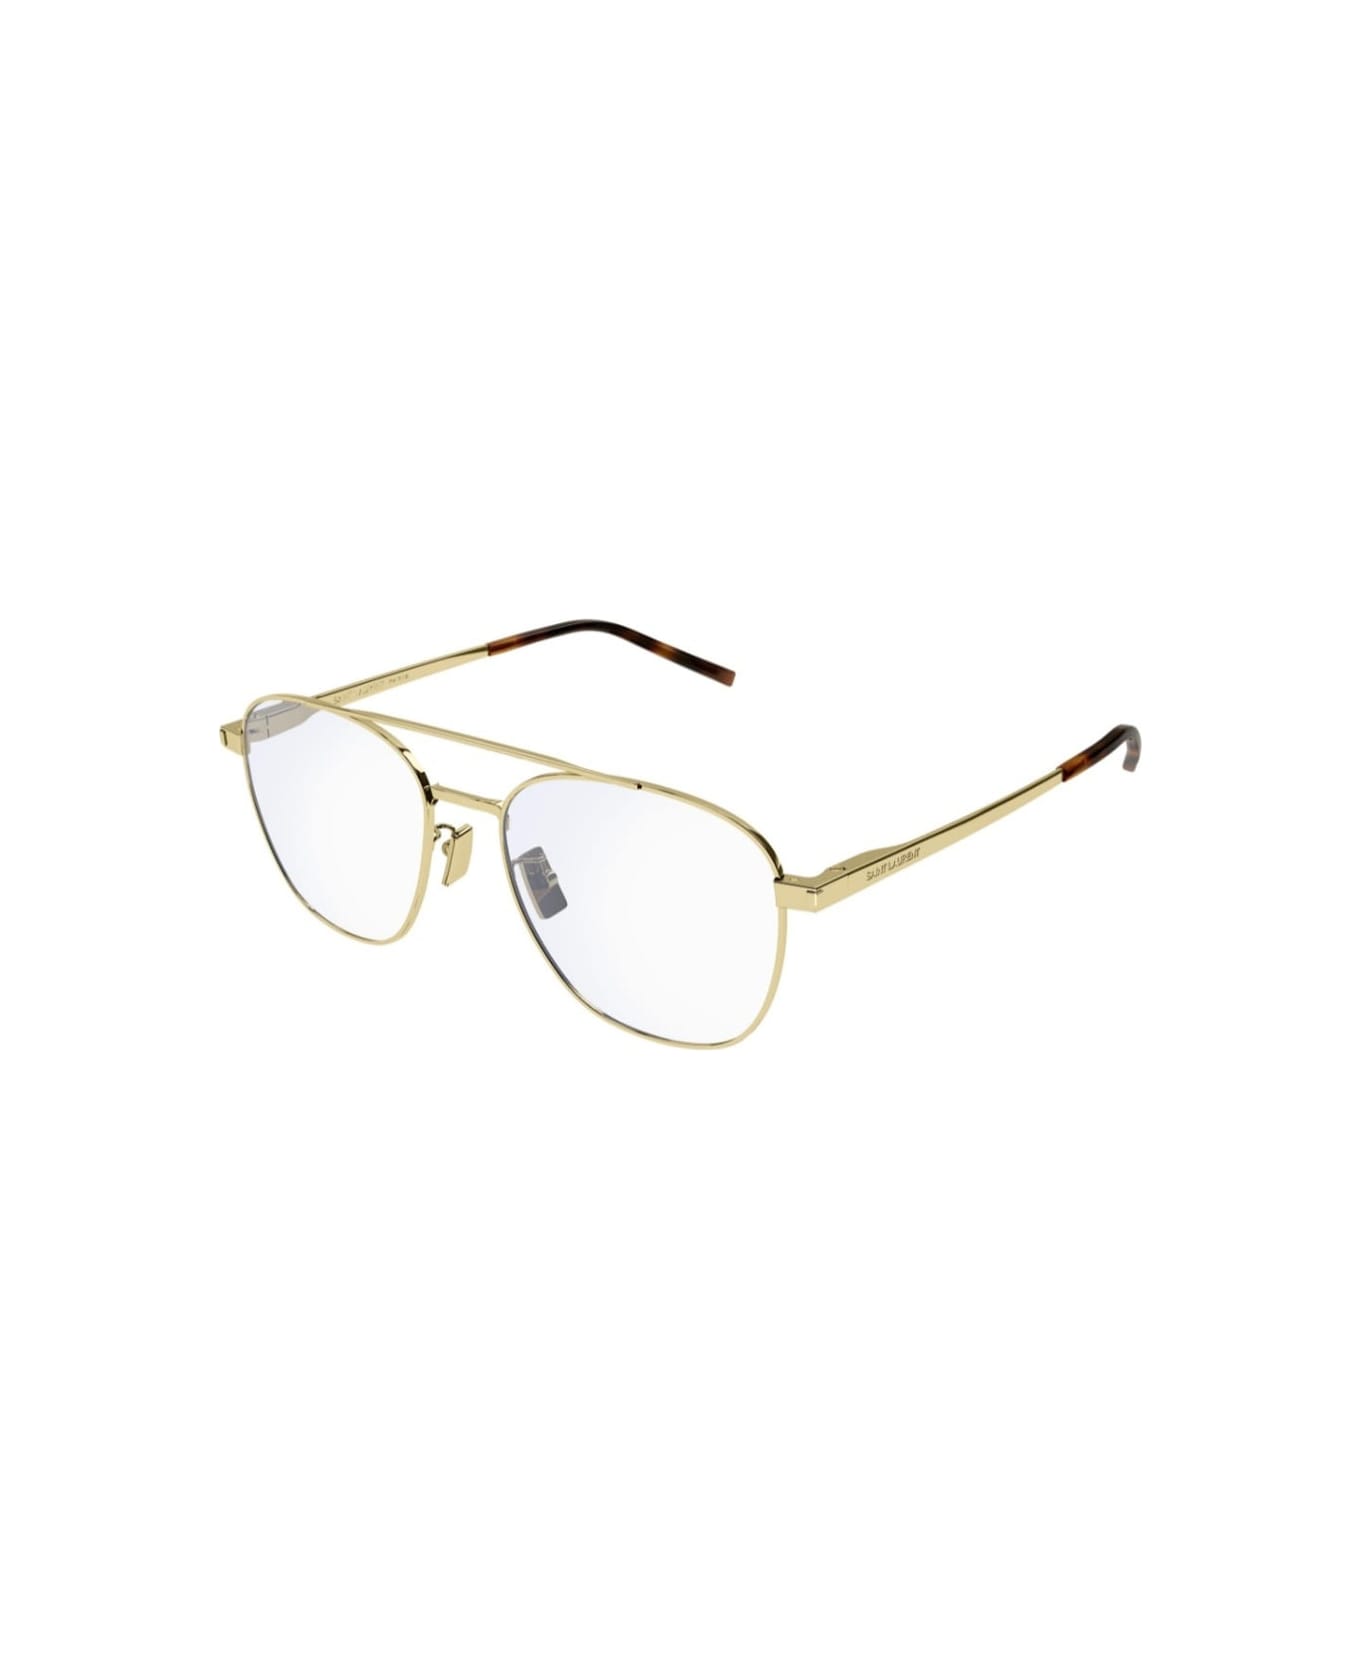 Saint Laurent Eyewear sl 530 003 Glasses